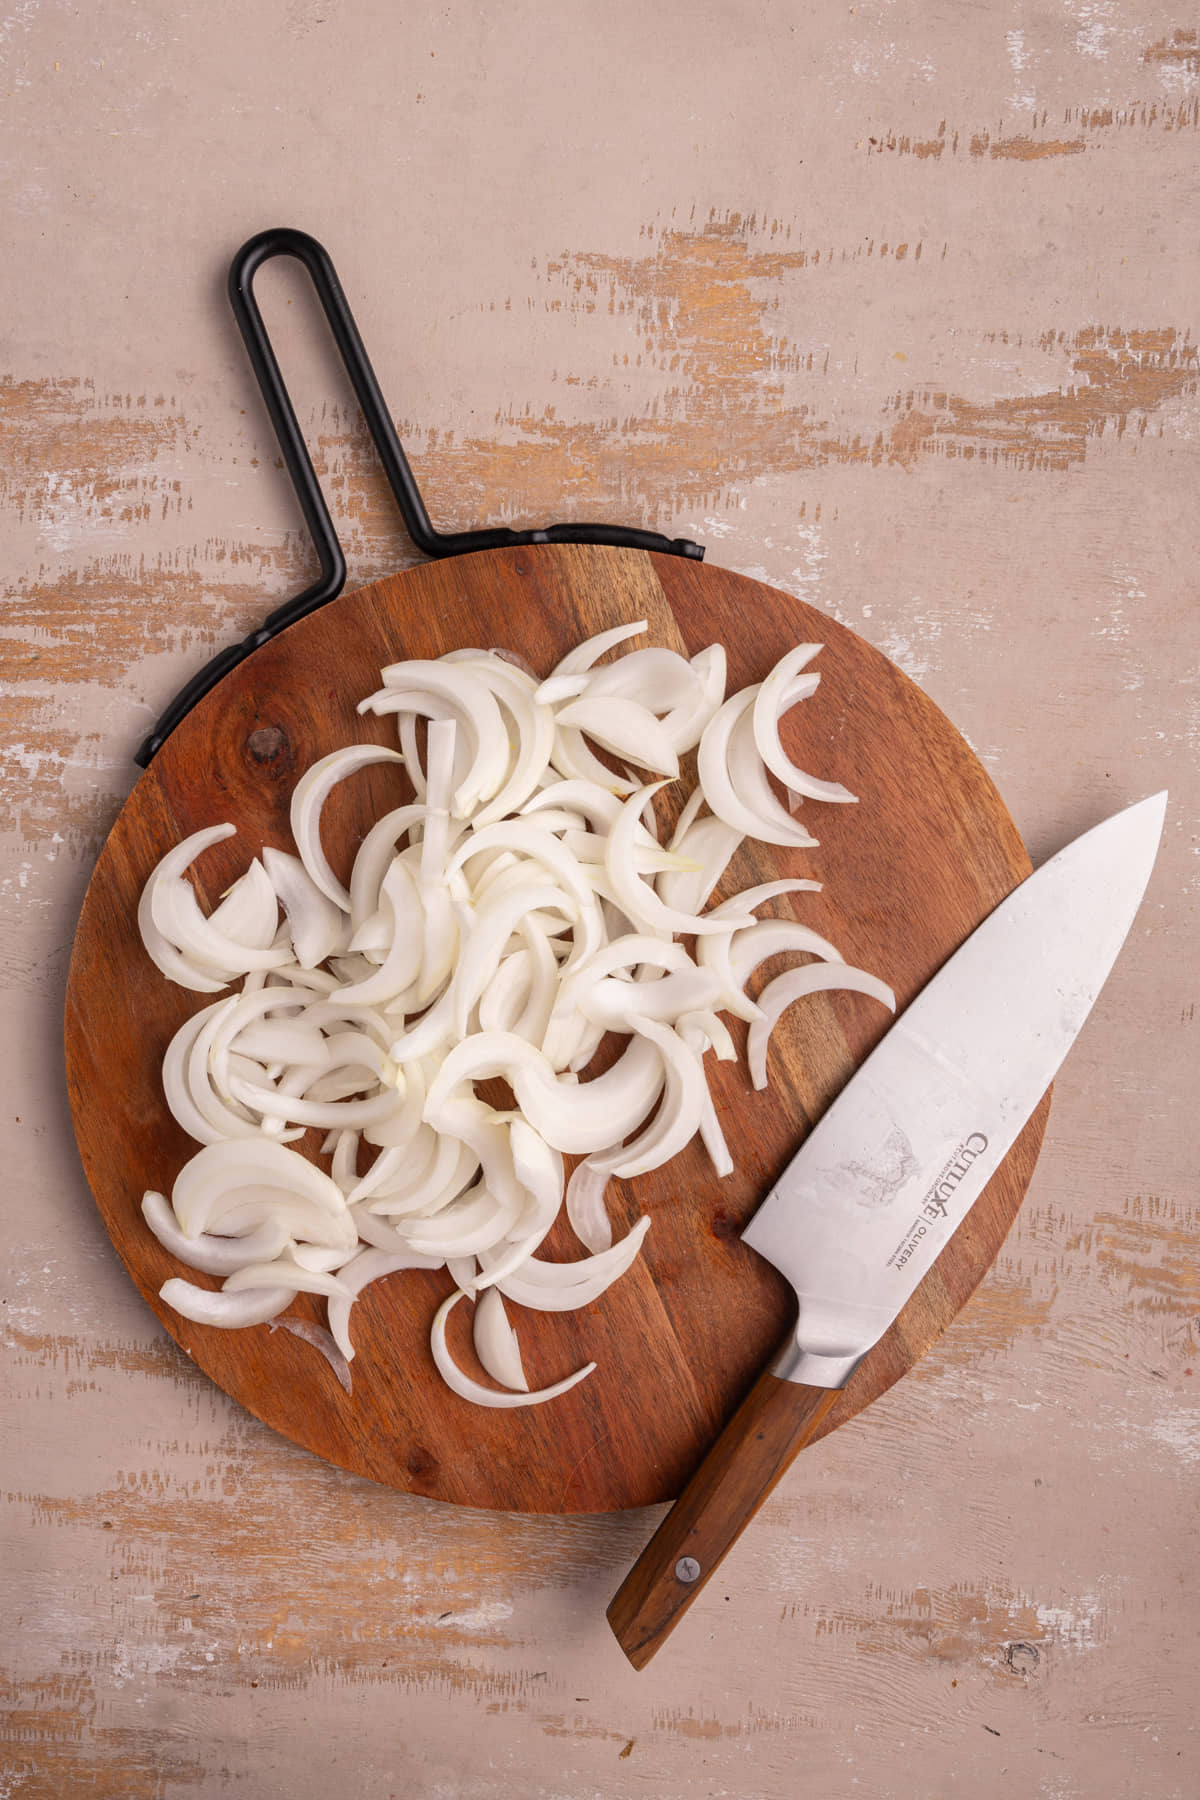 Onions sliced thin on a chopping board